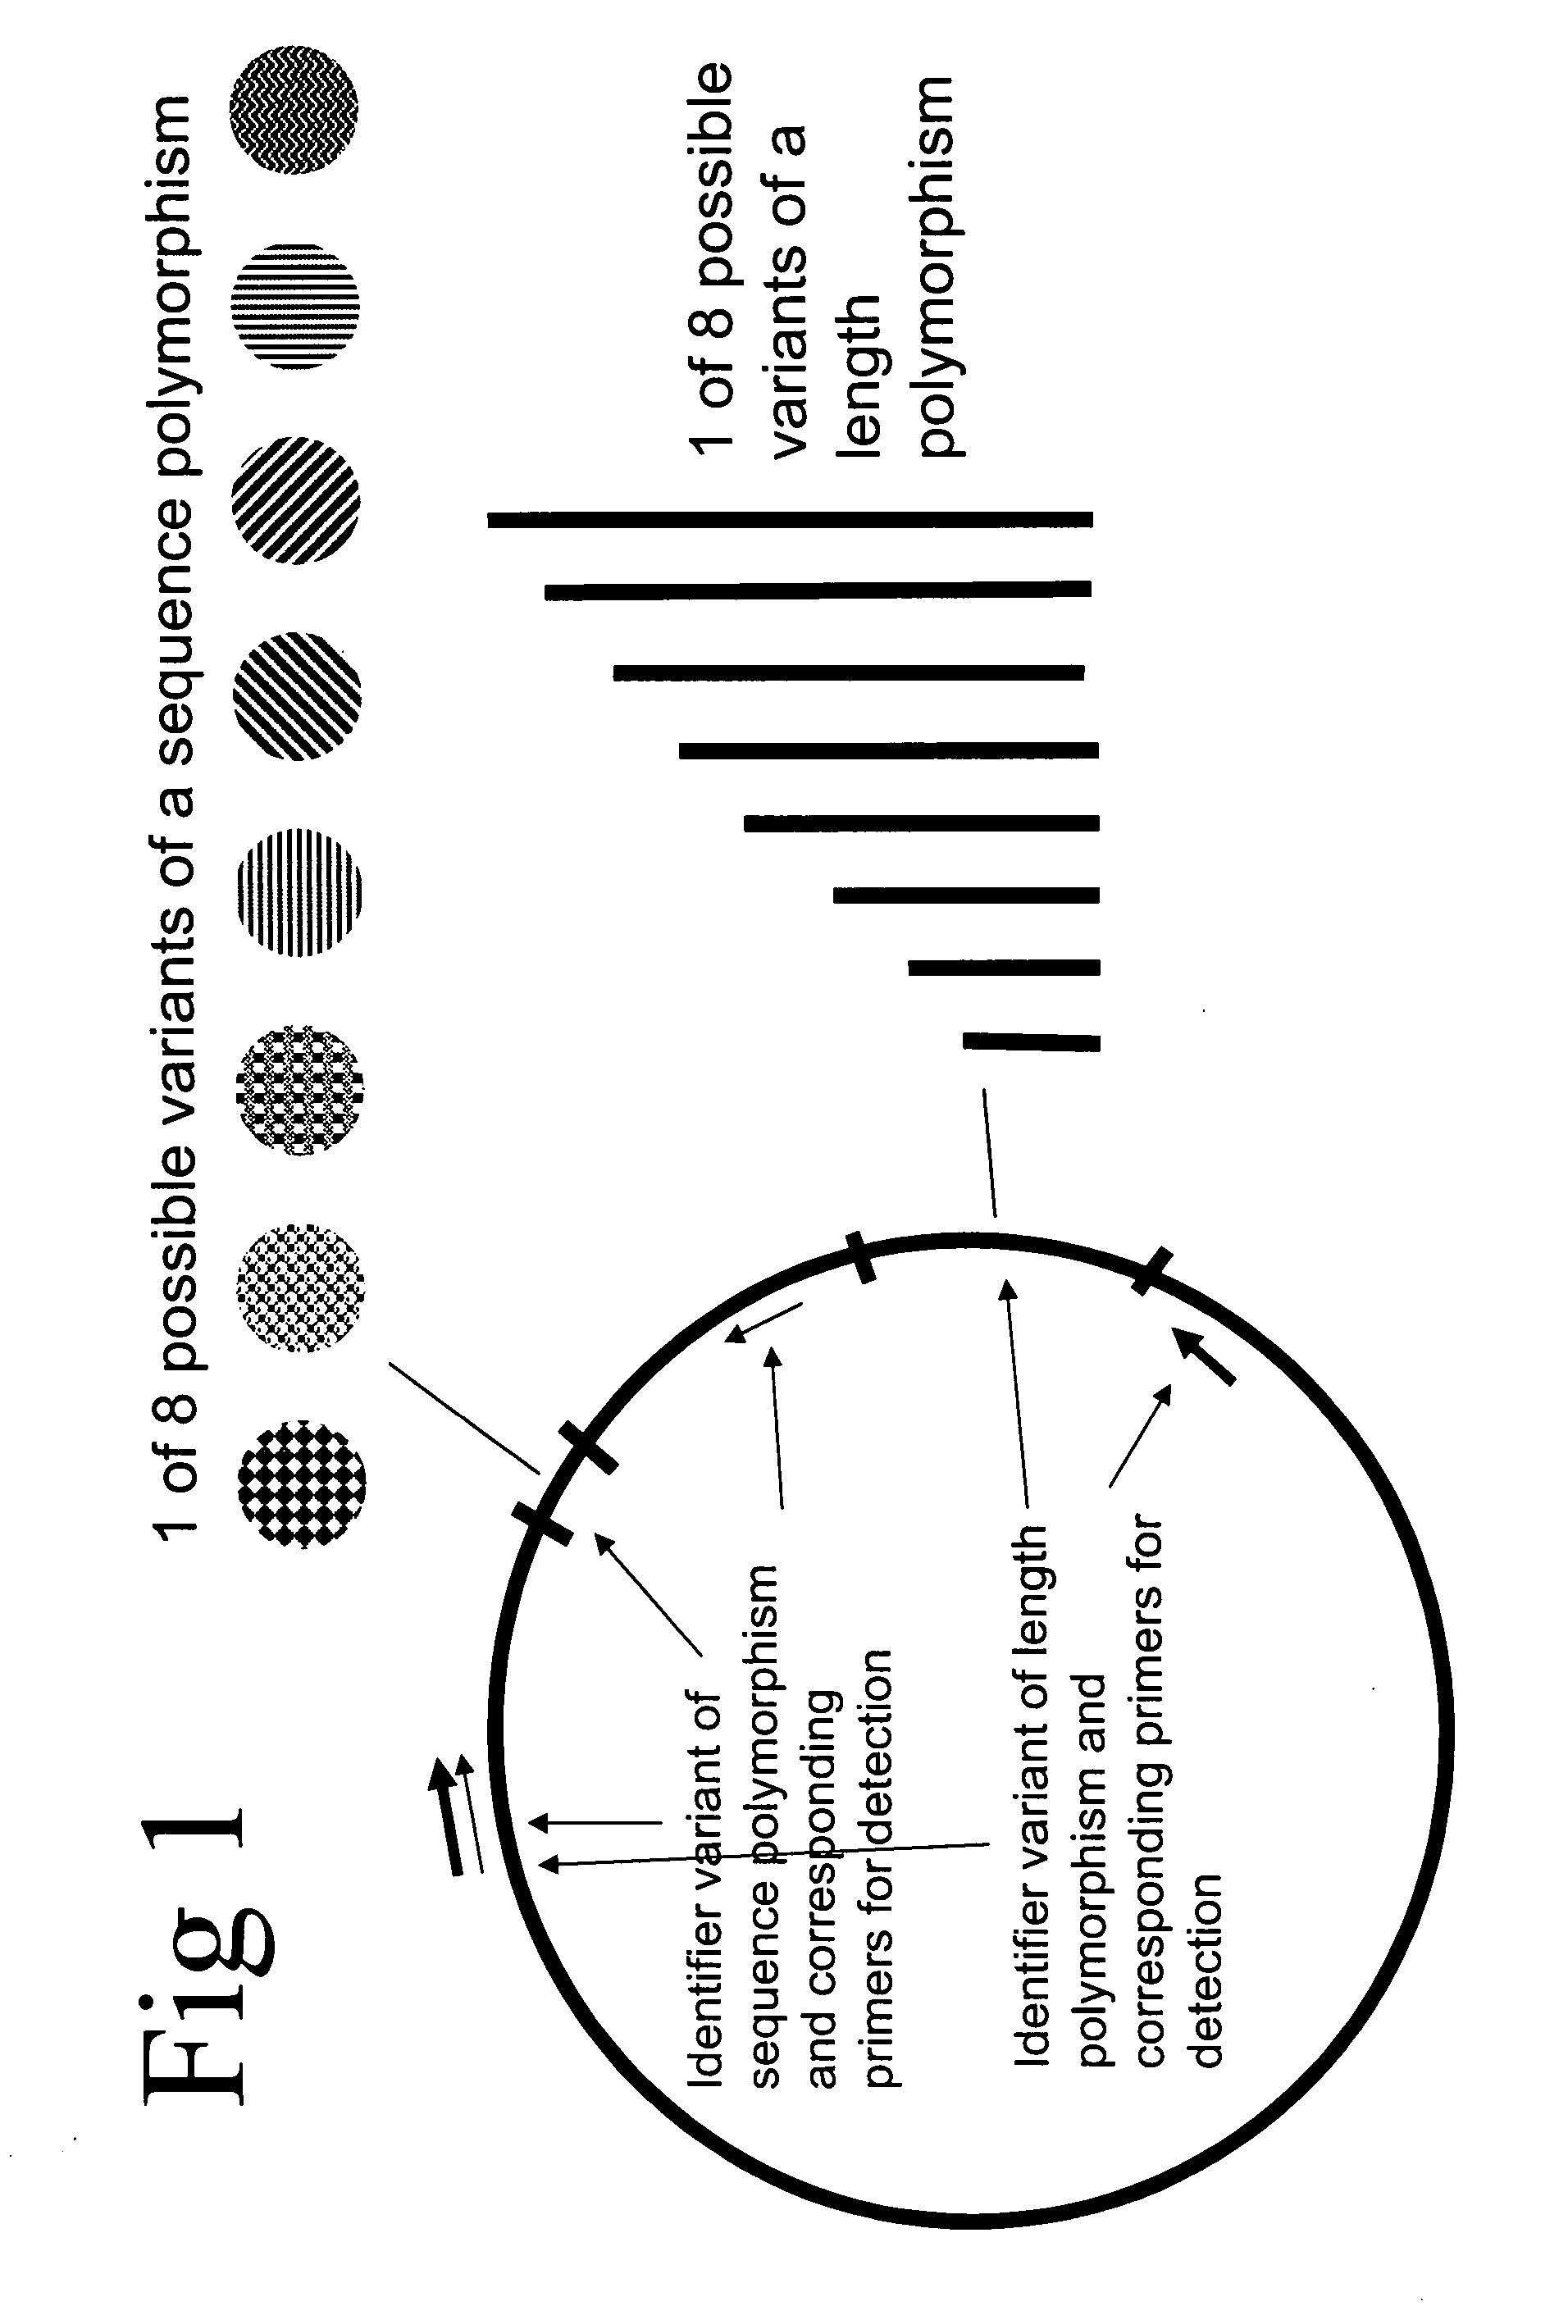 Method of identifying a biological sample for methylation analysis